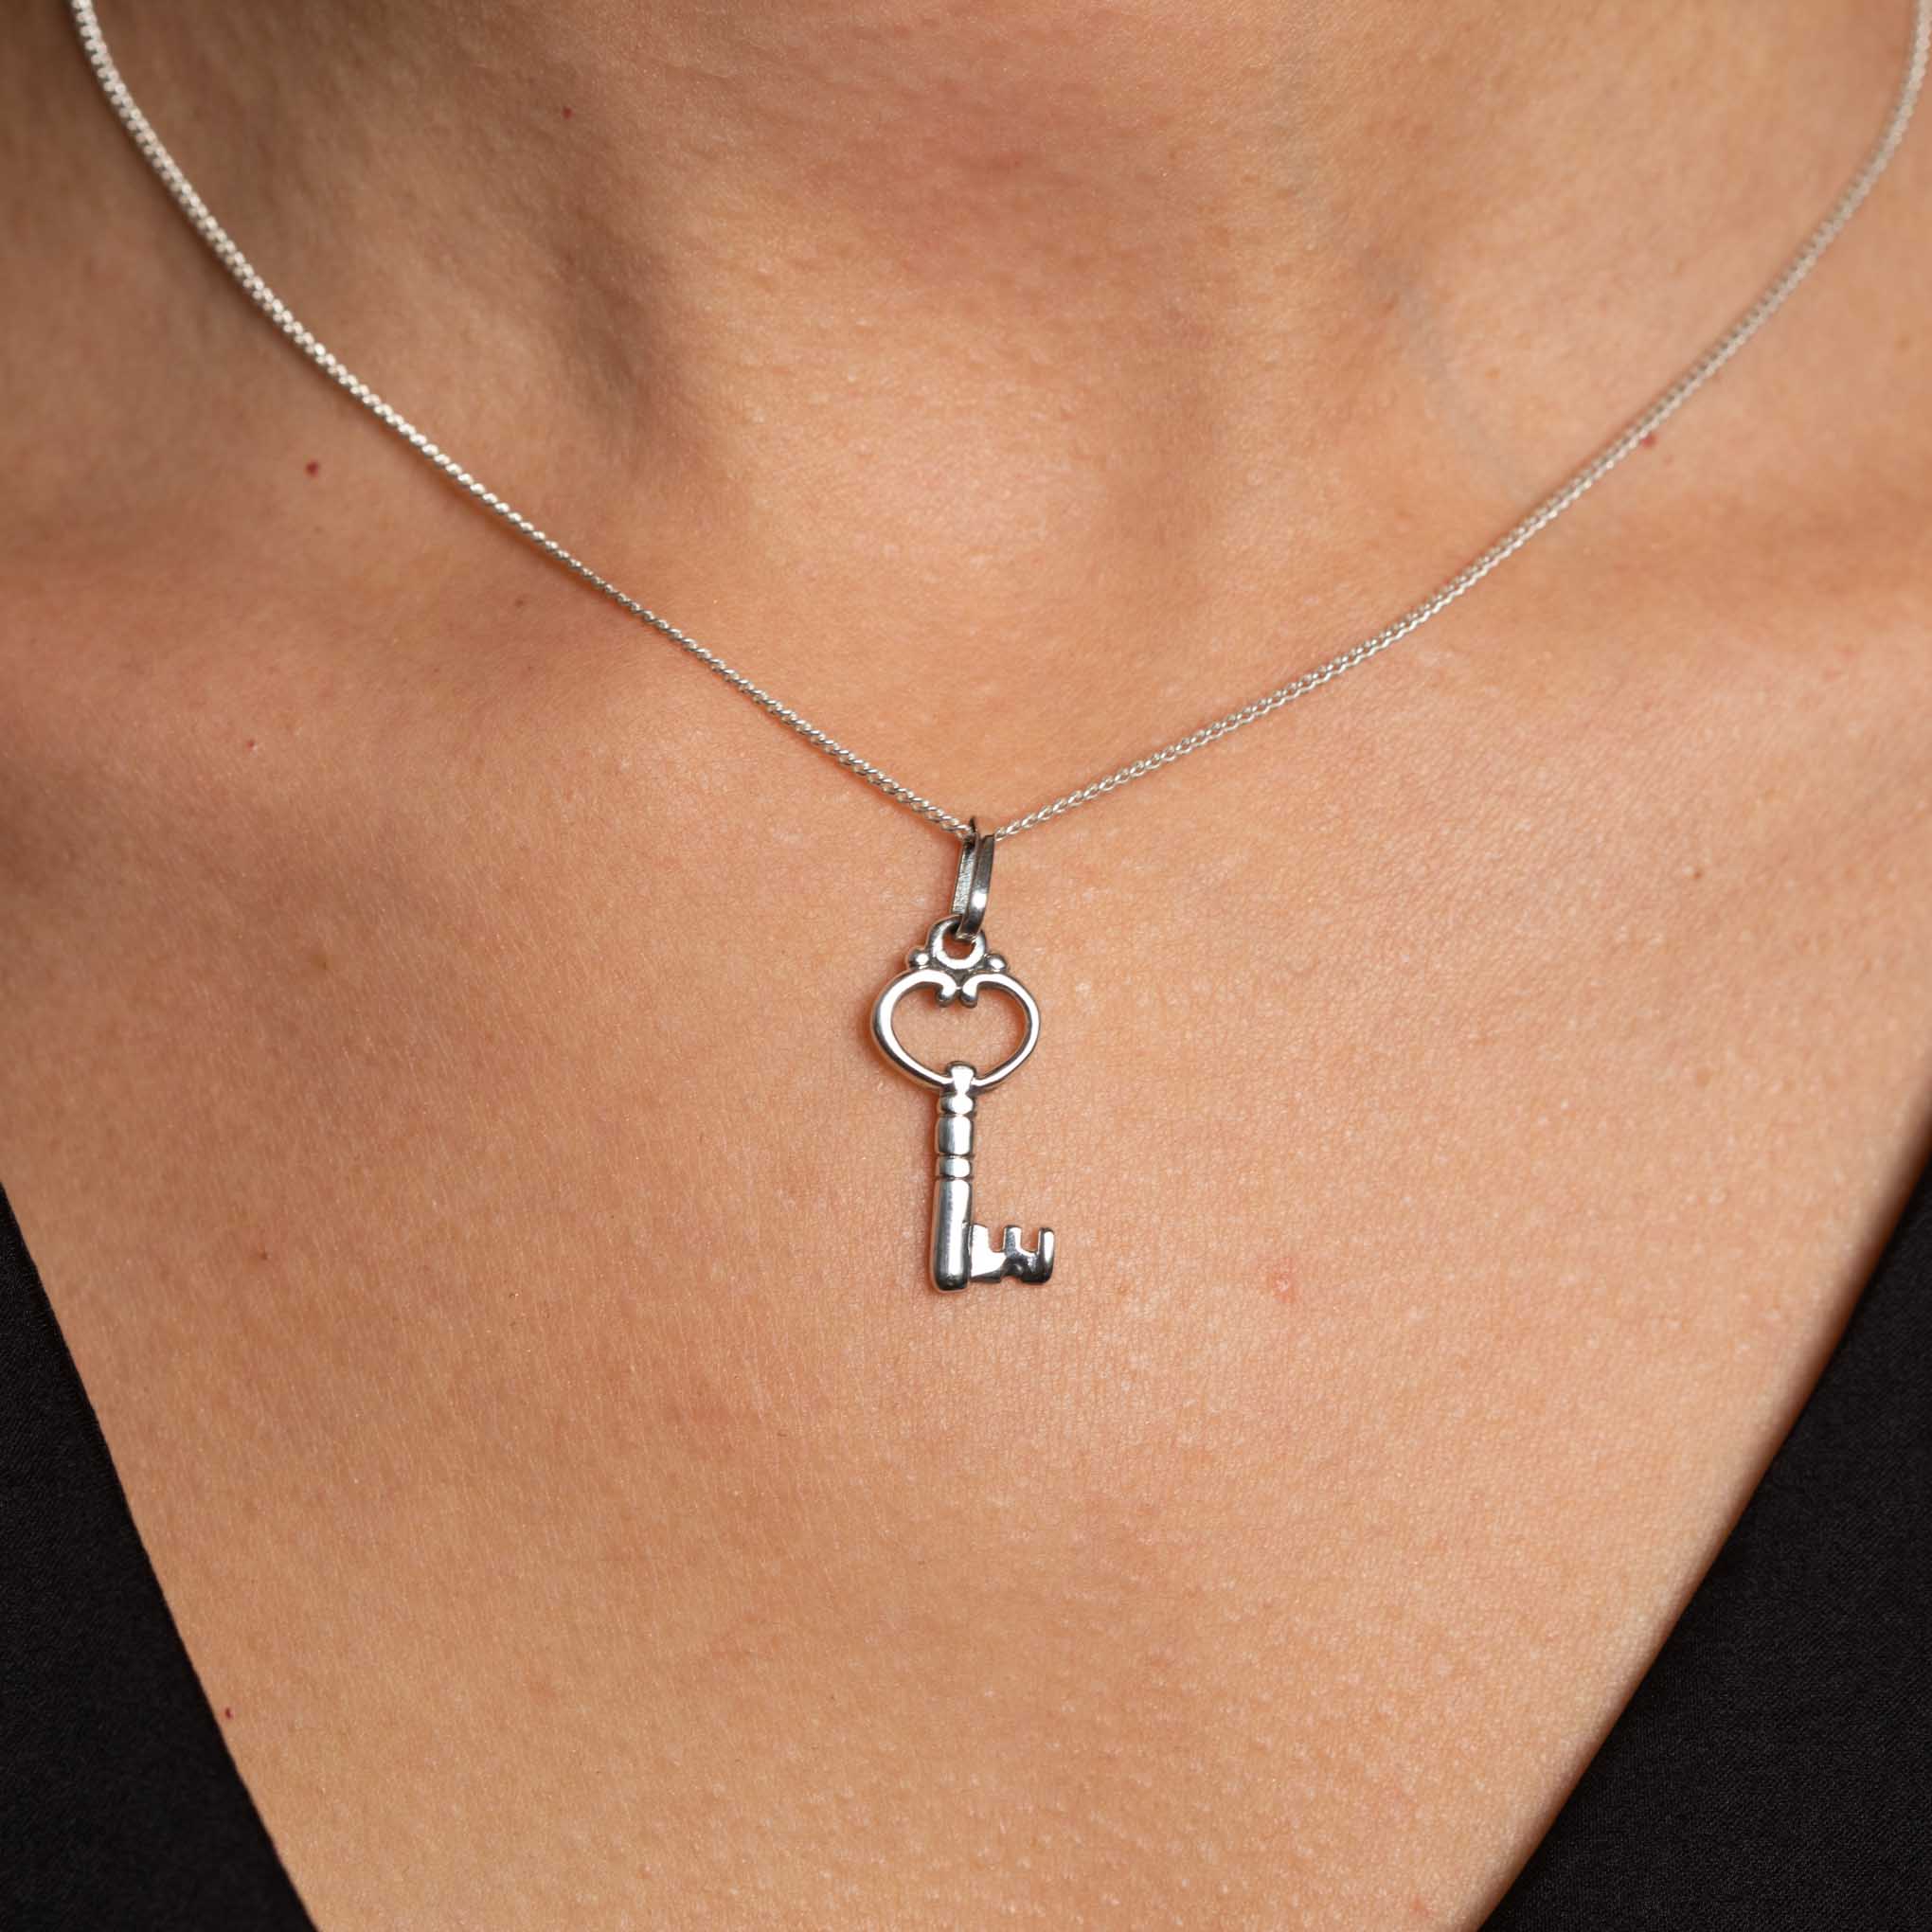 Silver pendant heart key